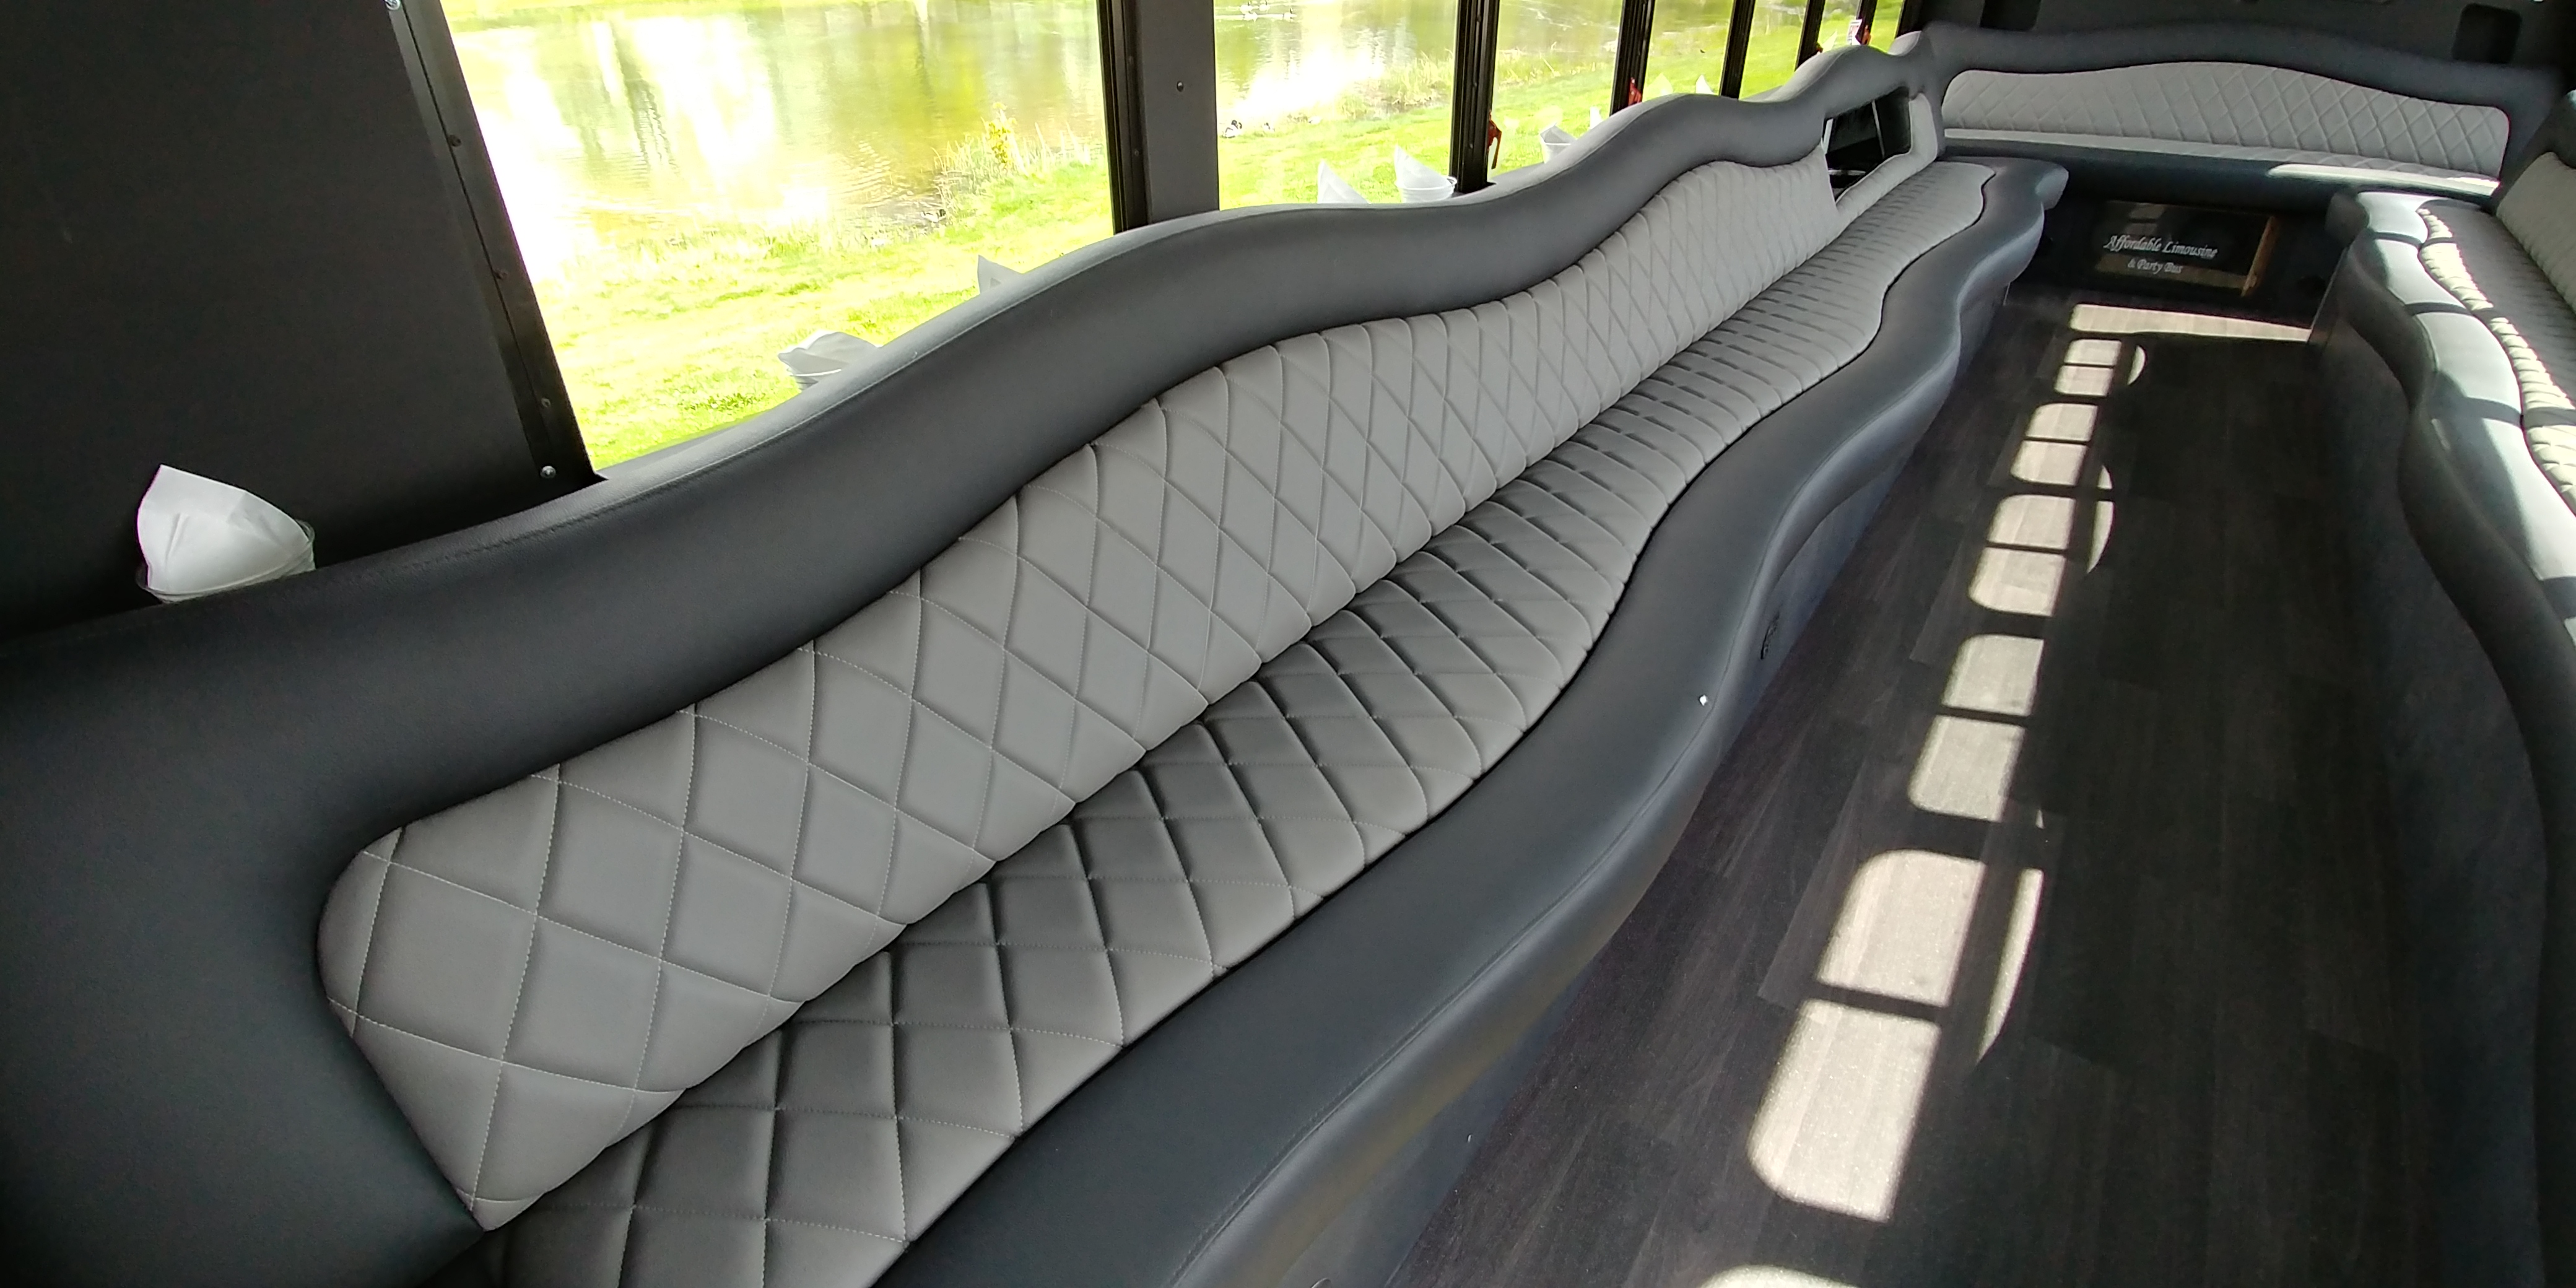 28 Passenger Luxury Limo Bus Interior 4